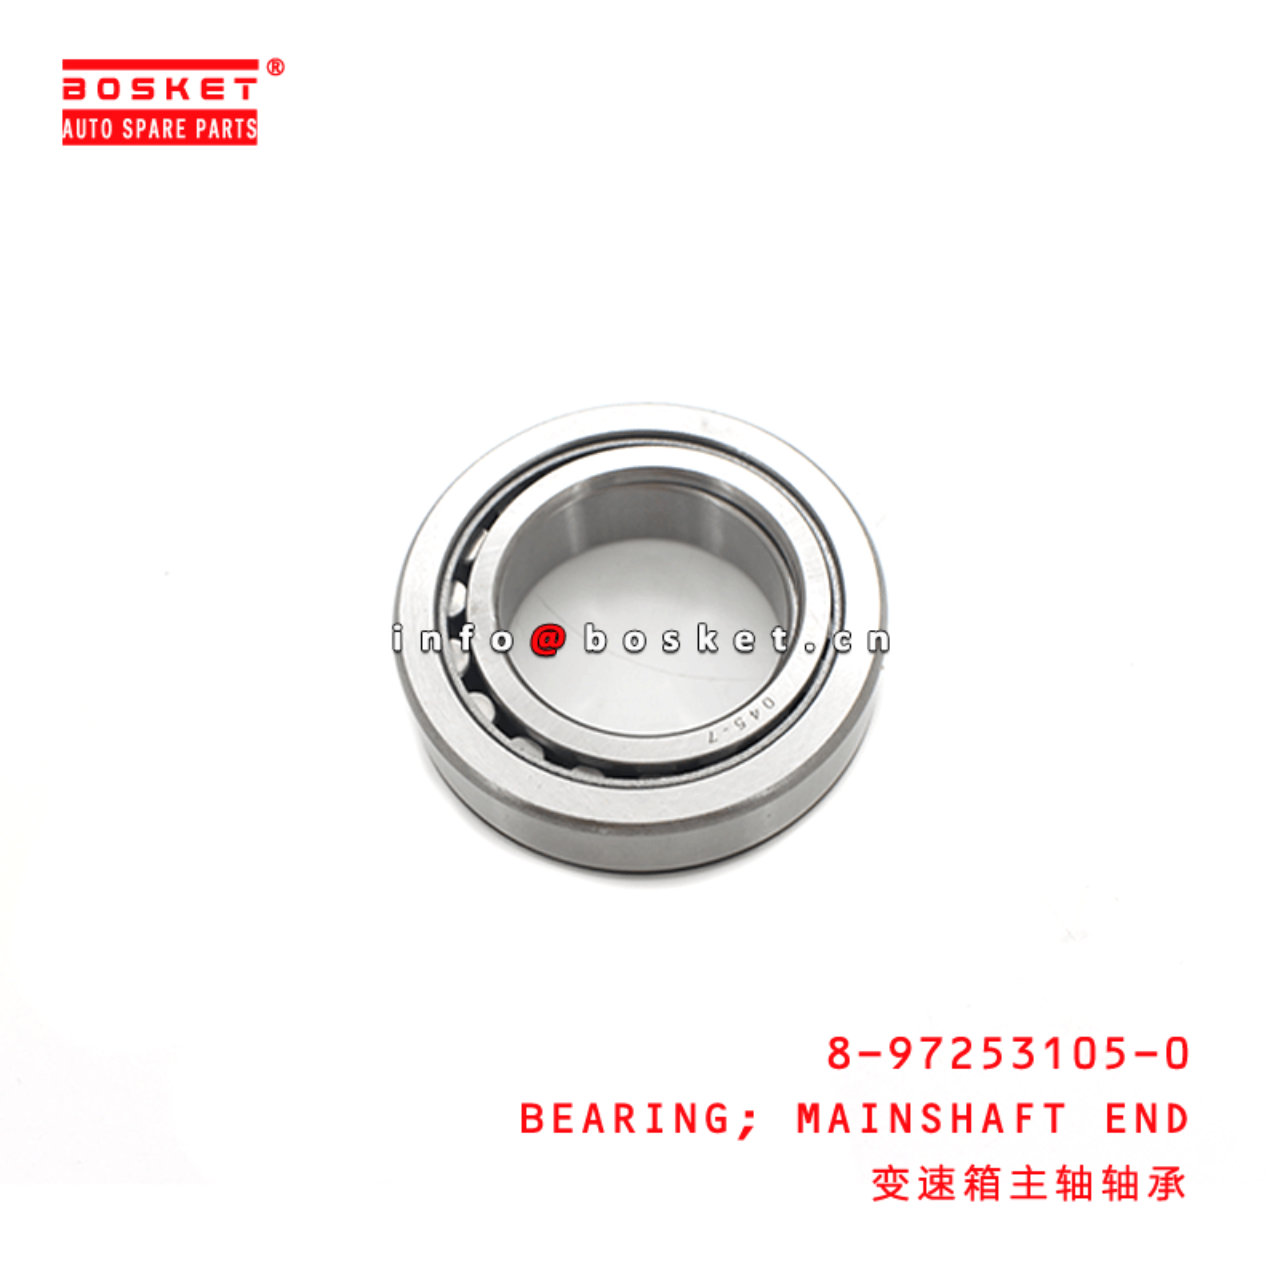 8-97253105-0 Mainshaft End Bearing 8972531050 Suitable for ISUZU NQR71 4HG1 4HE1